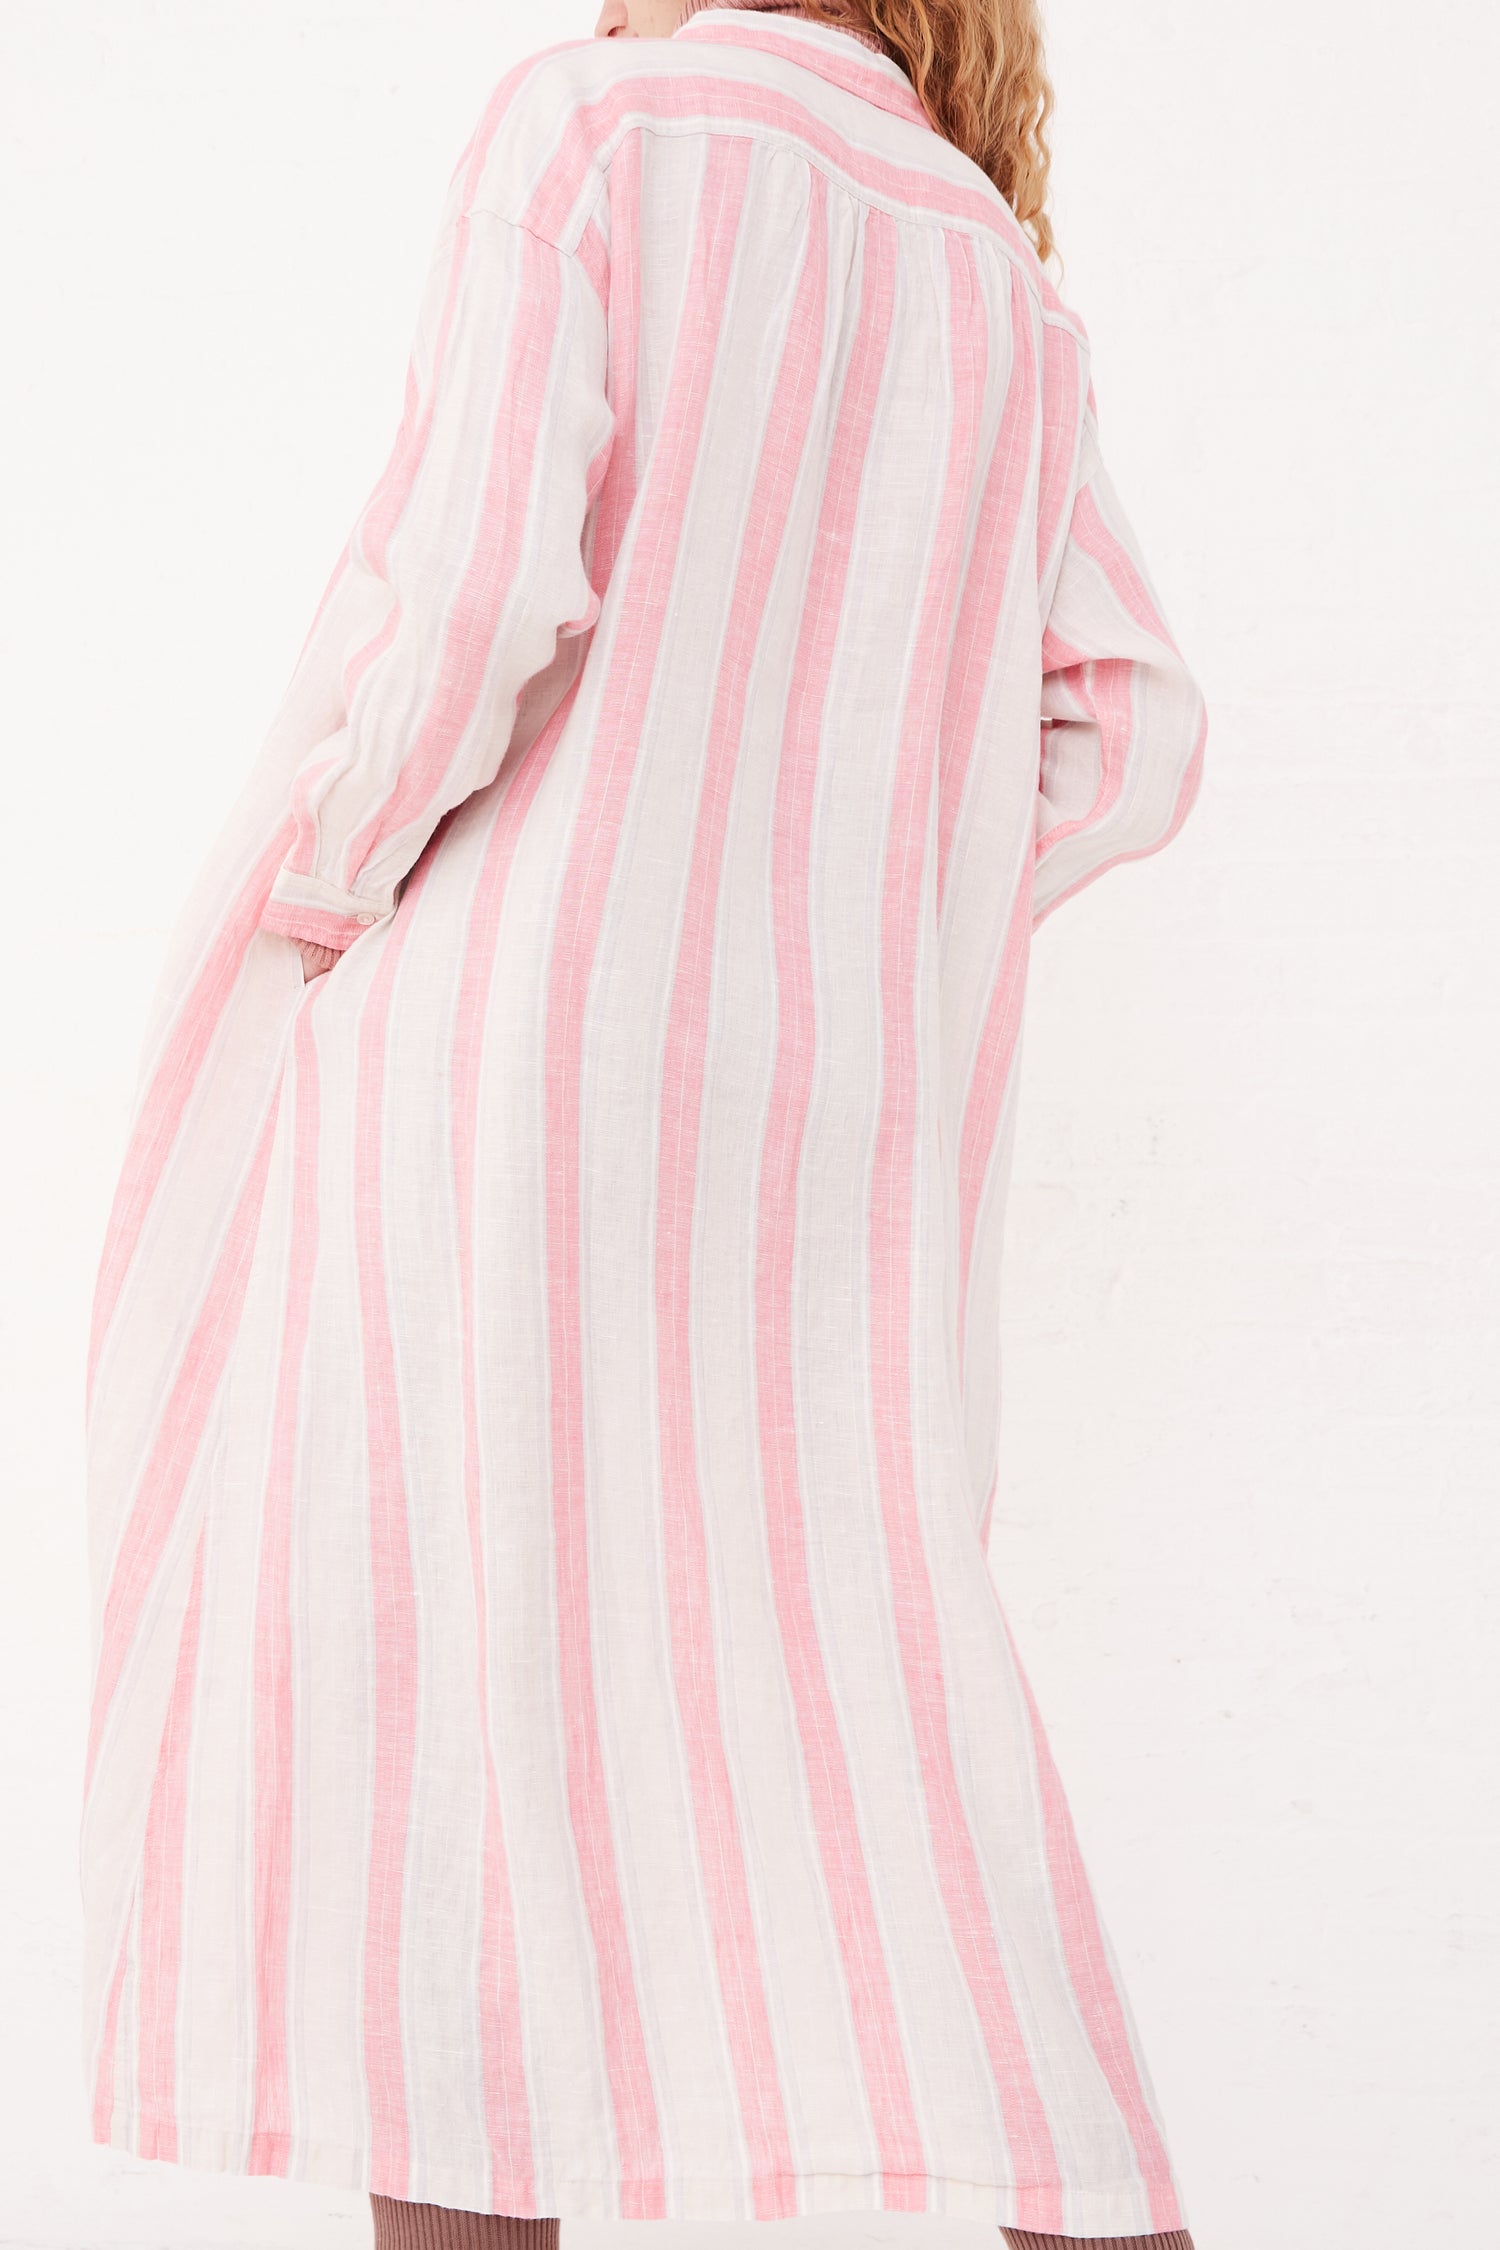 A model wearing a Ichi Antiquités relaxed-fit Linen Stripe Dress in Pink.